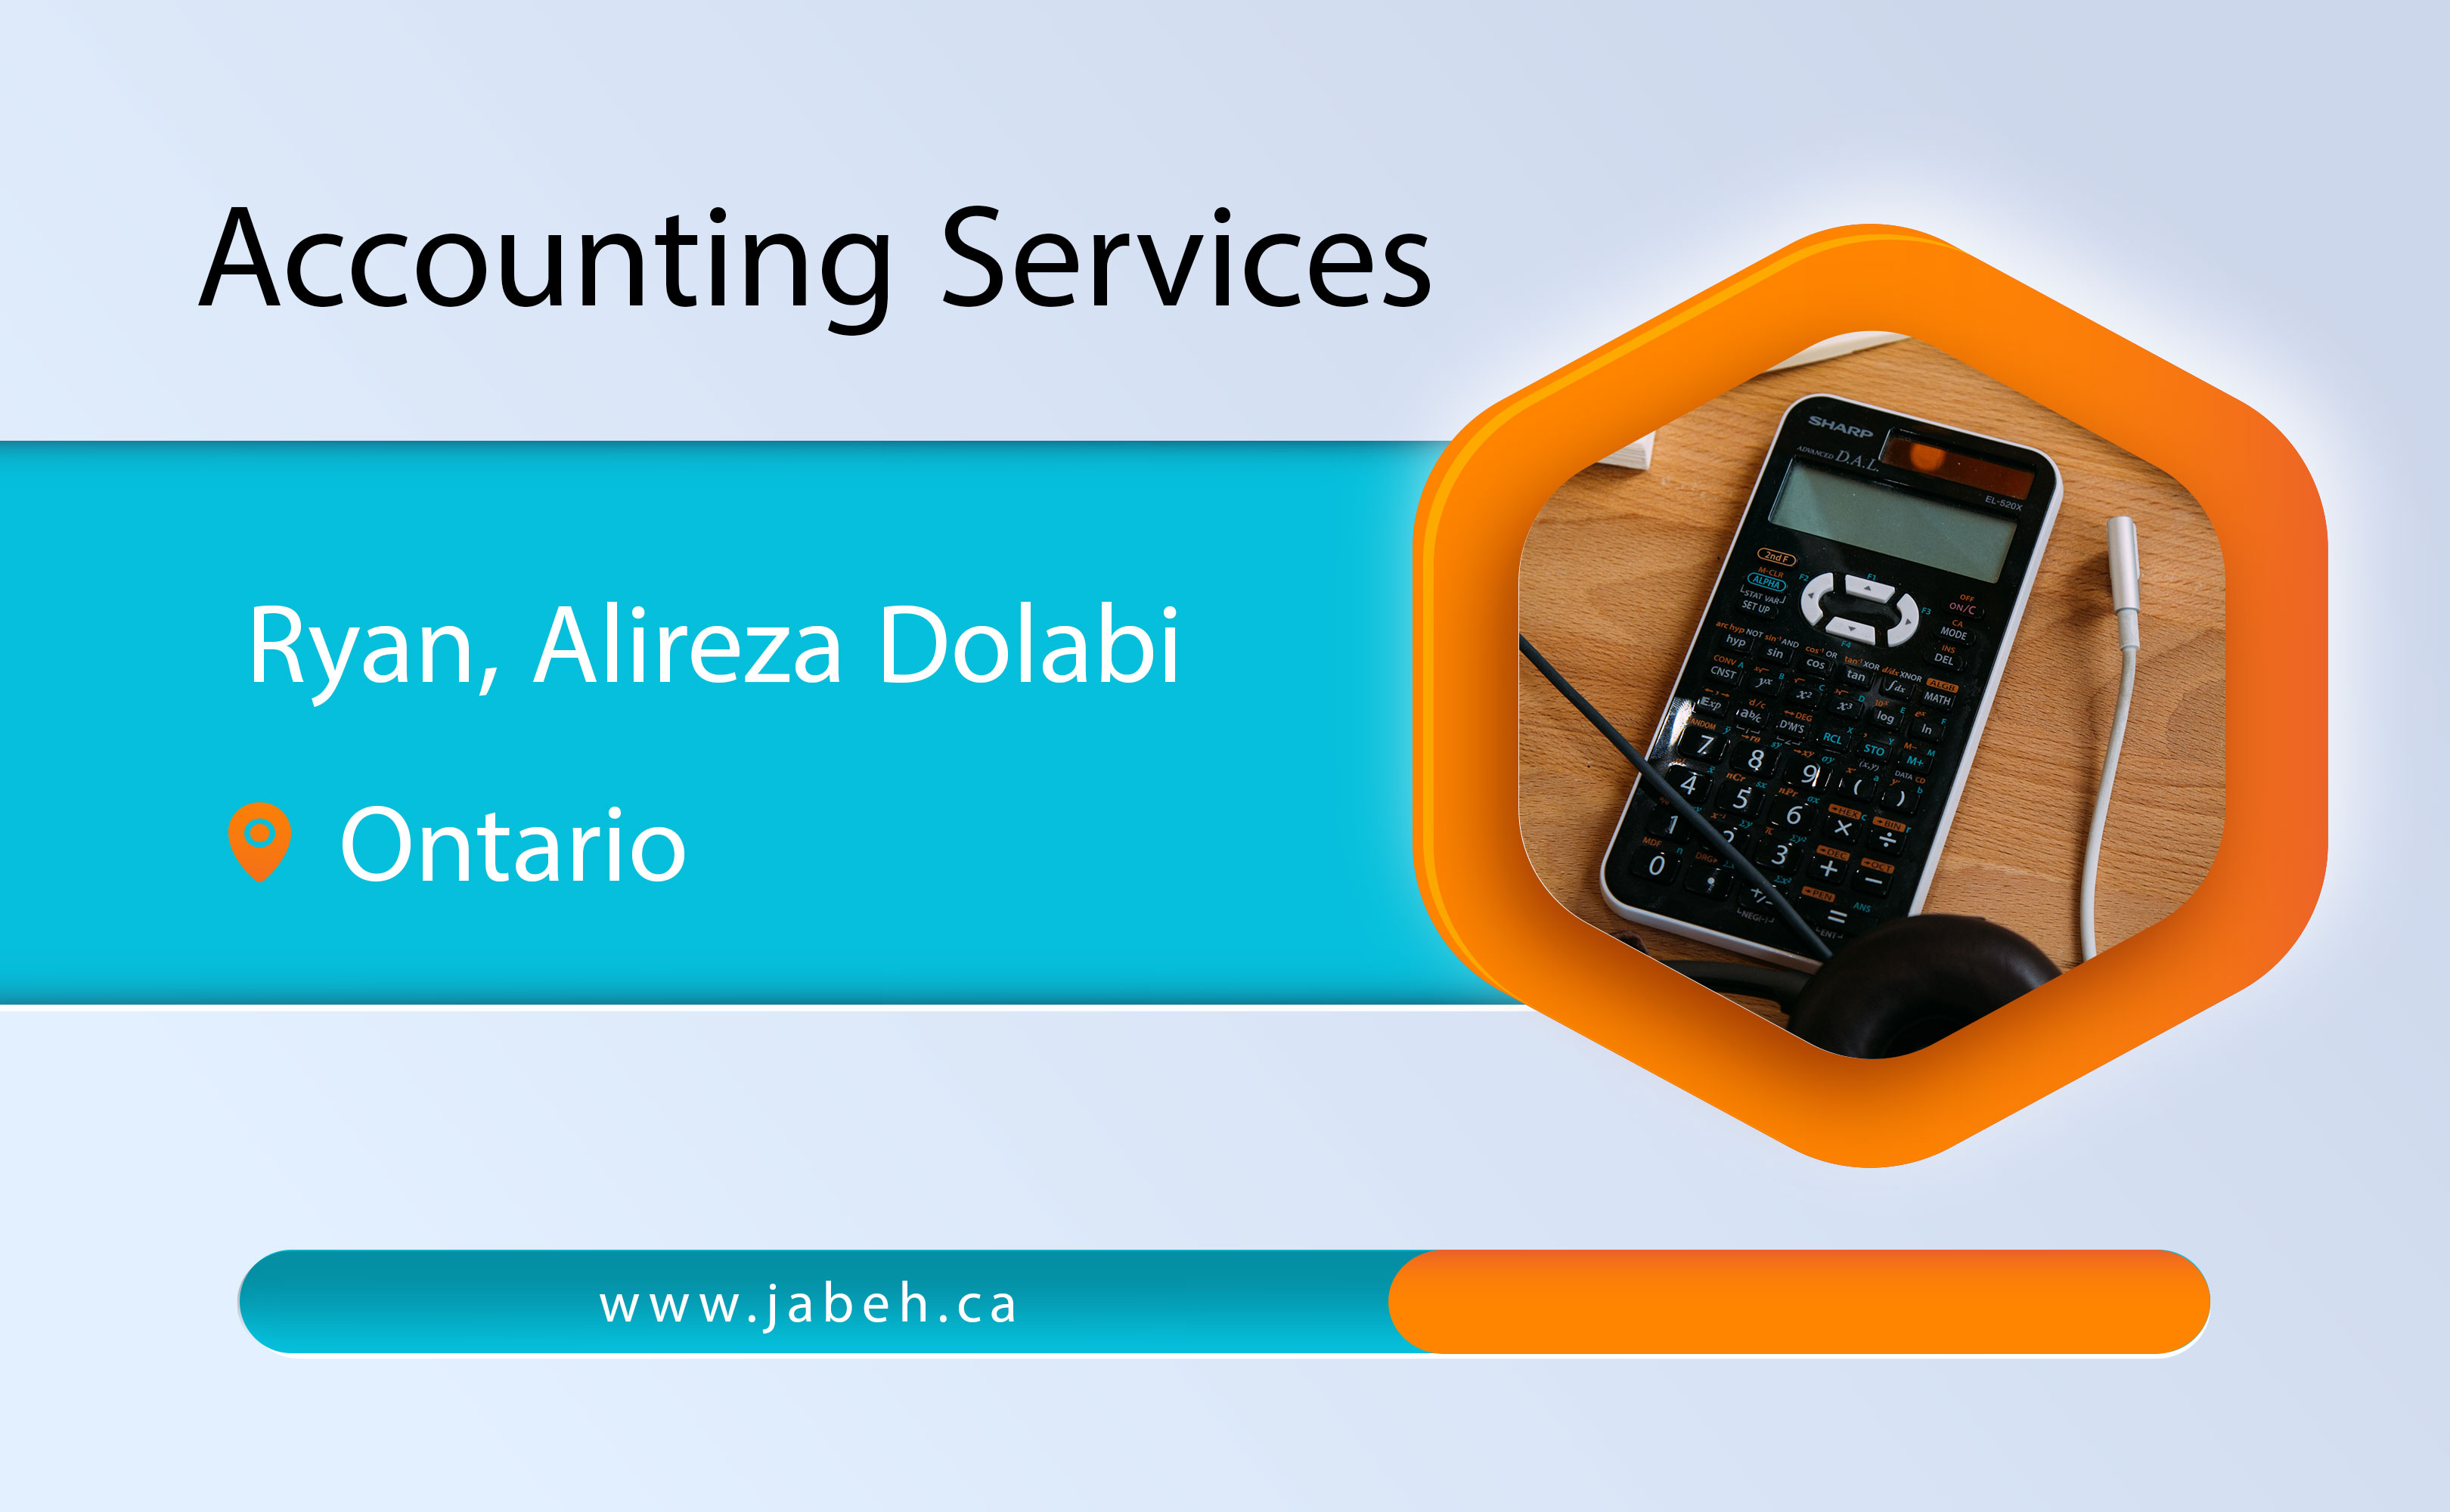 Iranian Ryan Accounting Services Company, Ali Reza Dolabi in Ontario